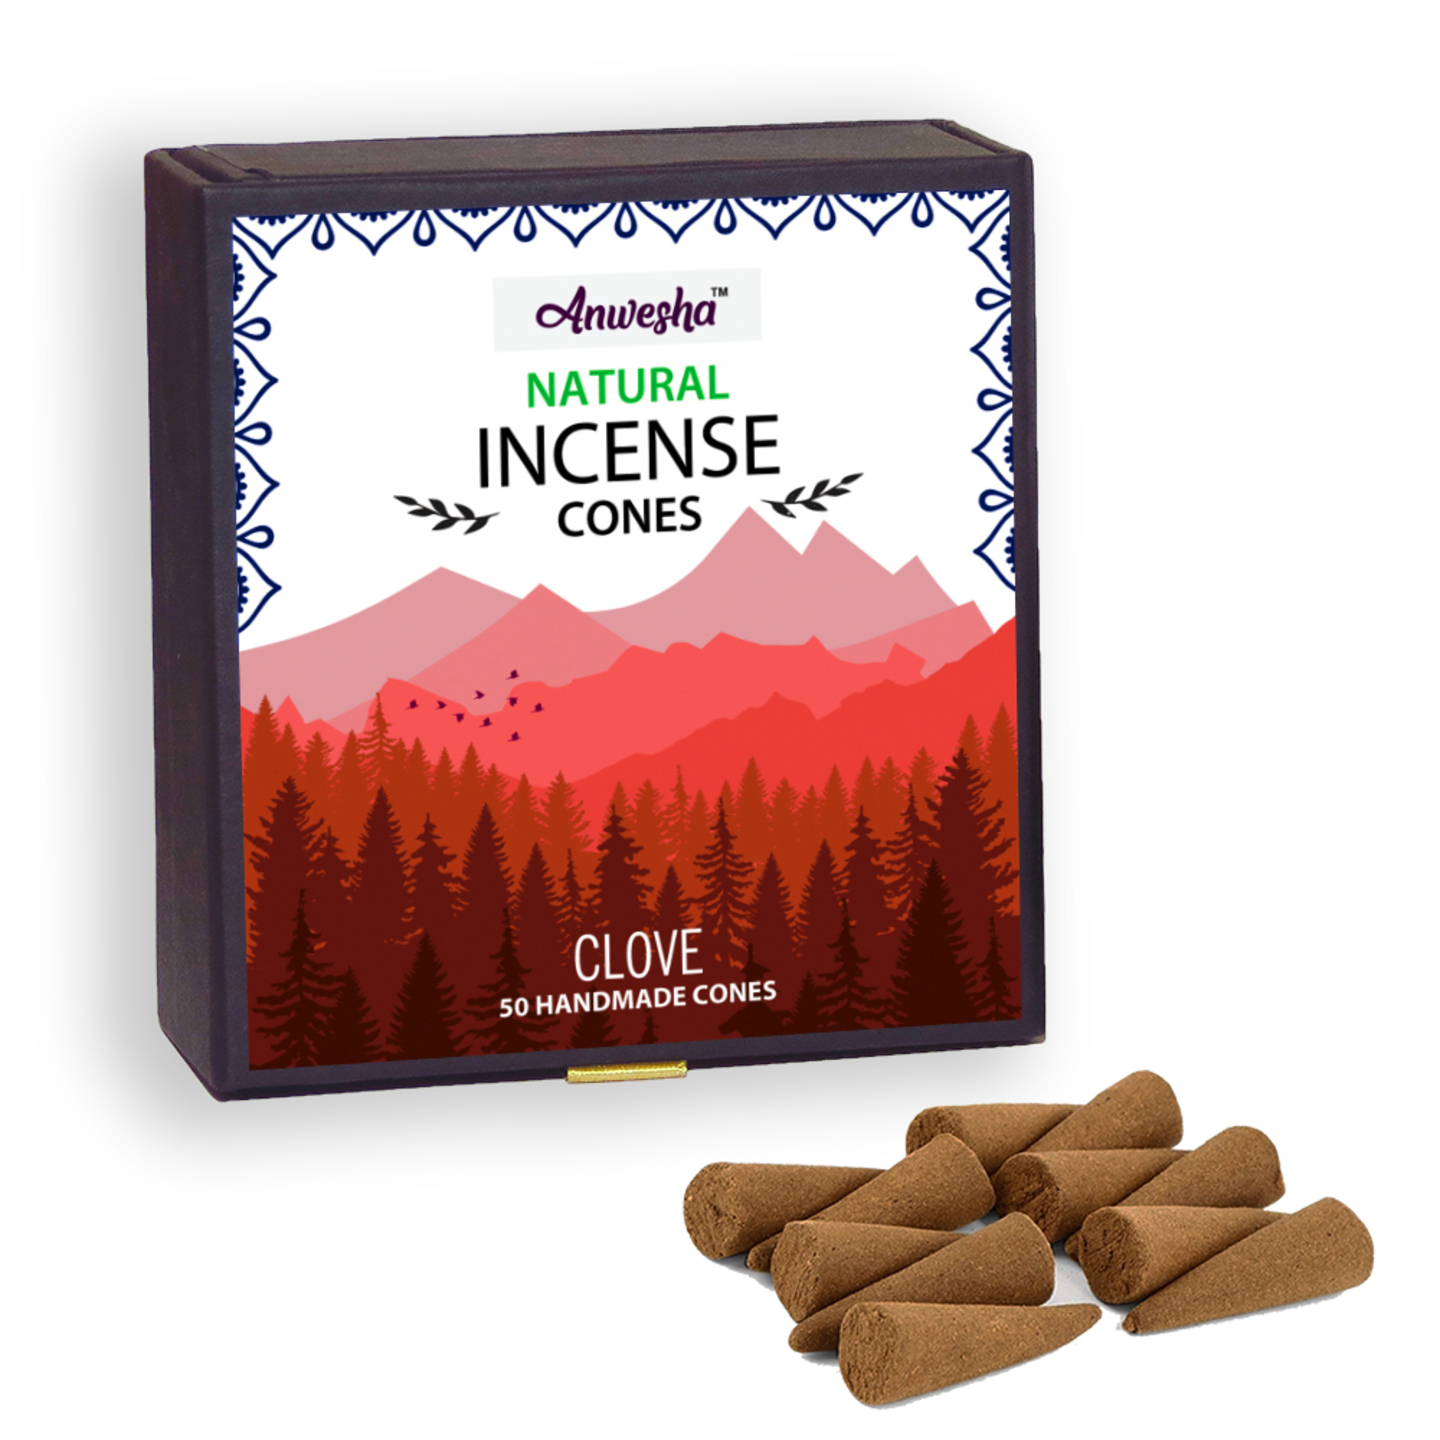 Clove Incense Cones Box Set - 50 Cones